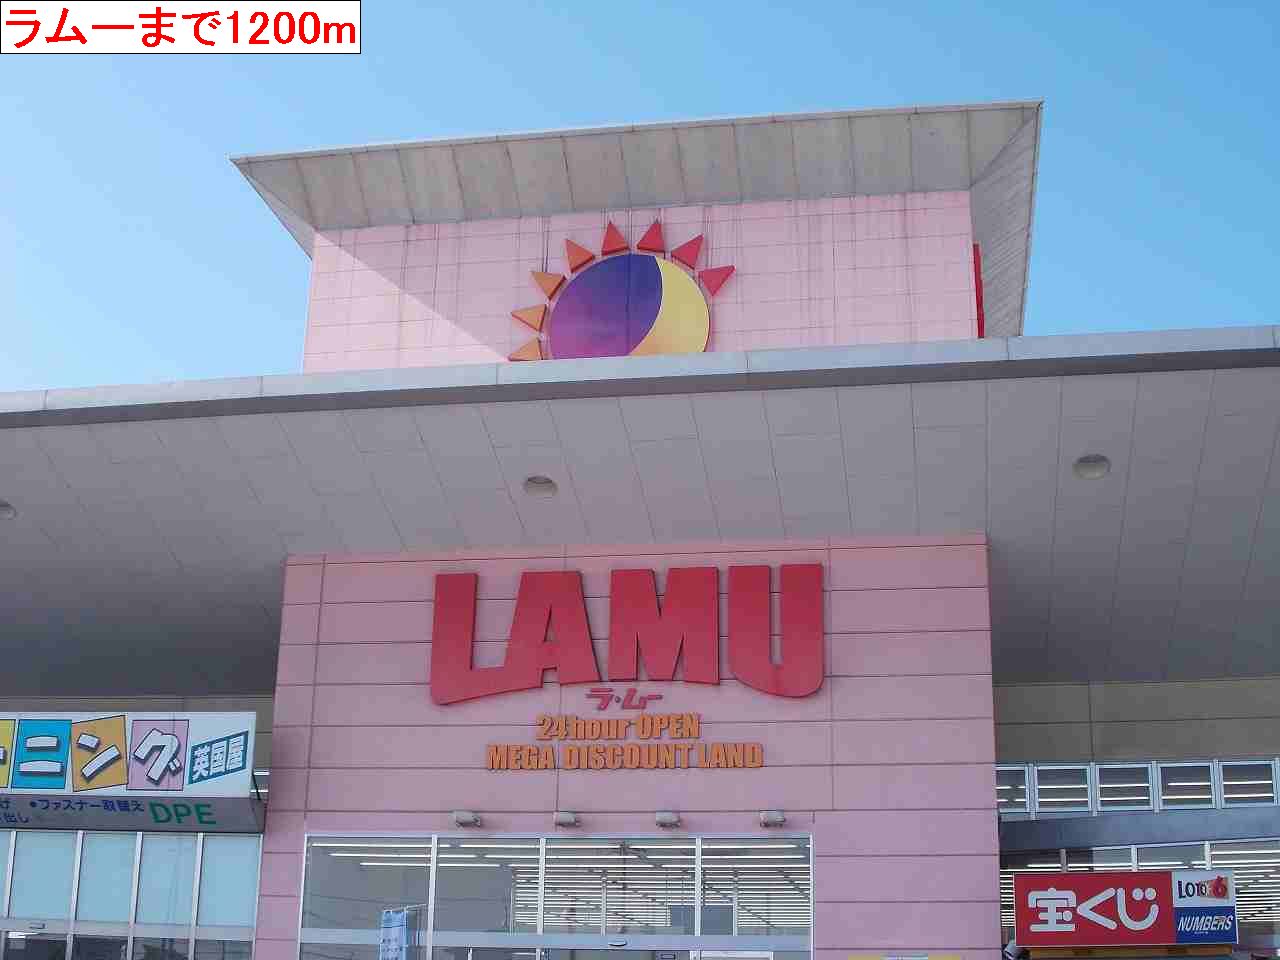 Shopping centre. Lamu until the (shopping center) 1200m